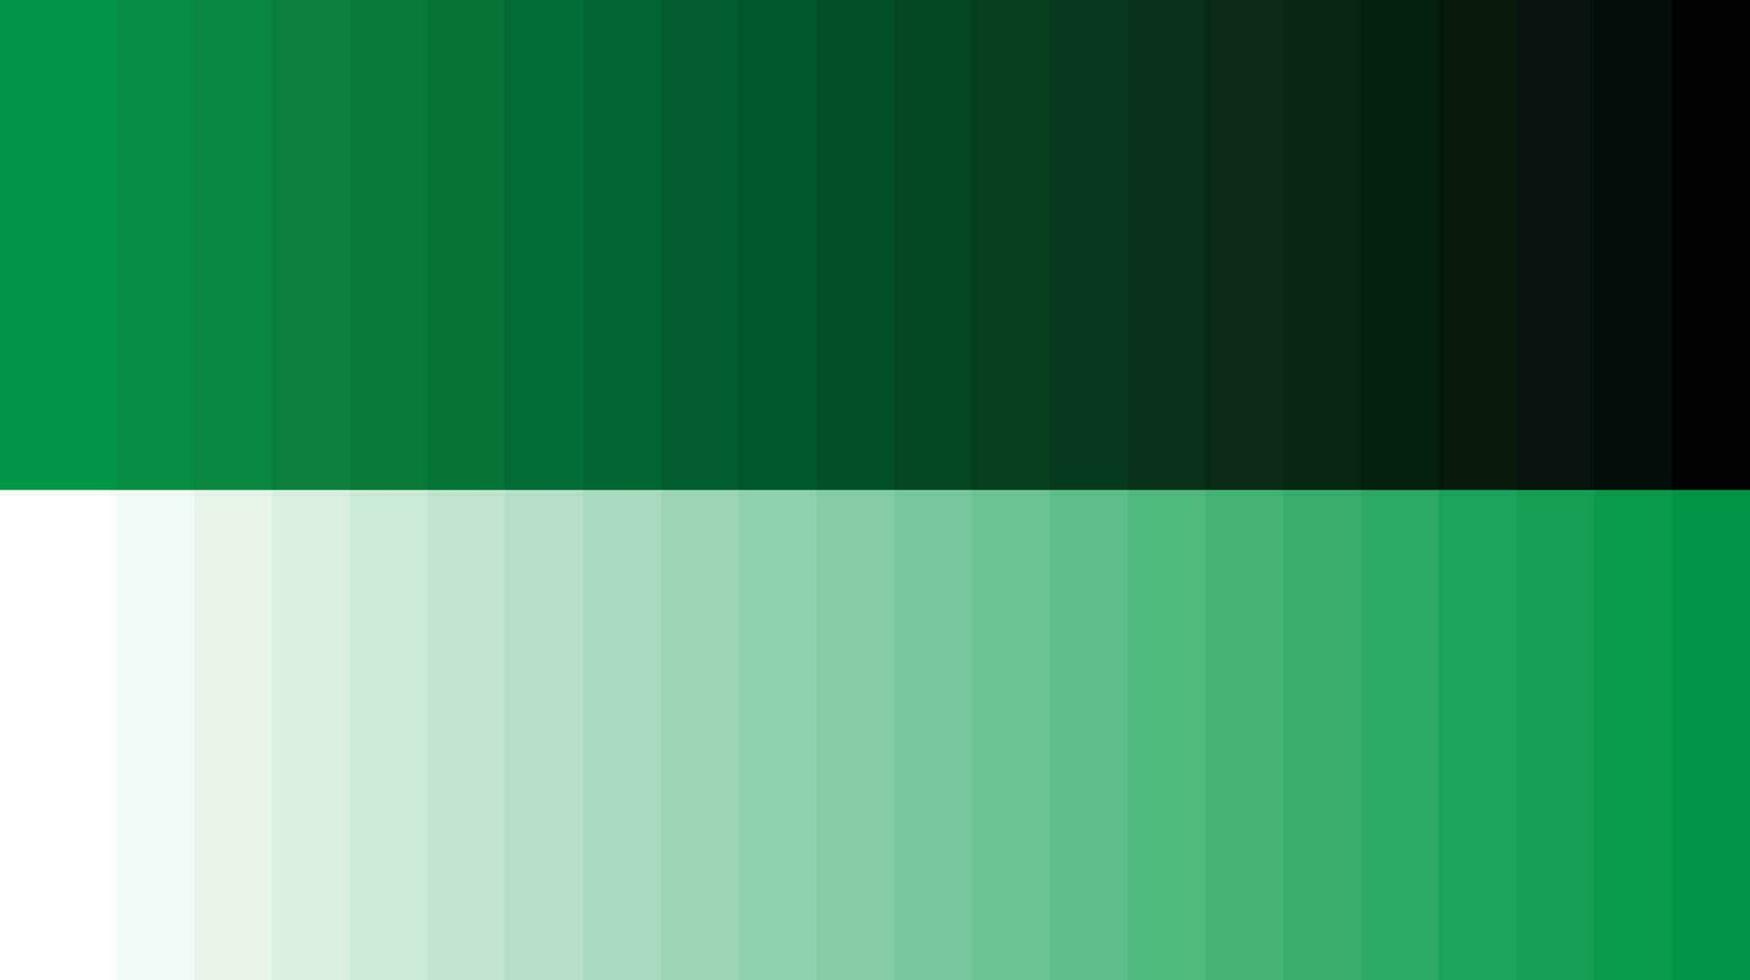 Farbpalette grün vektor